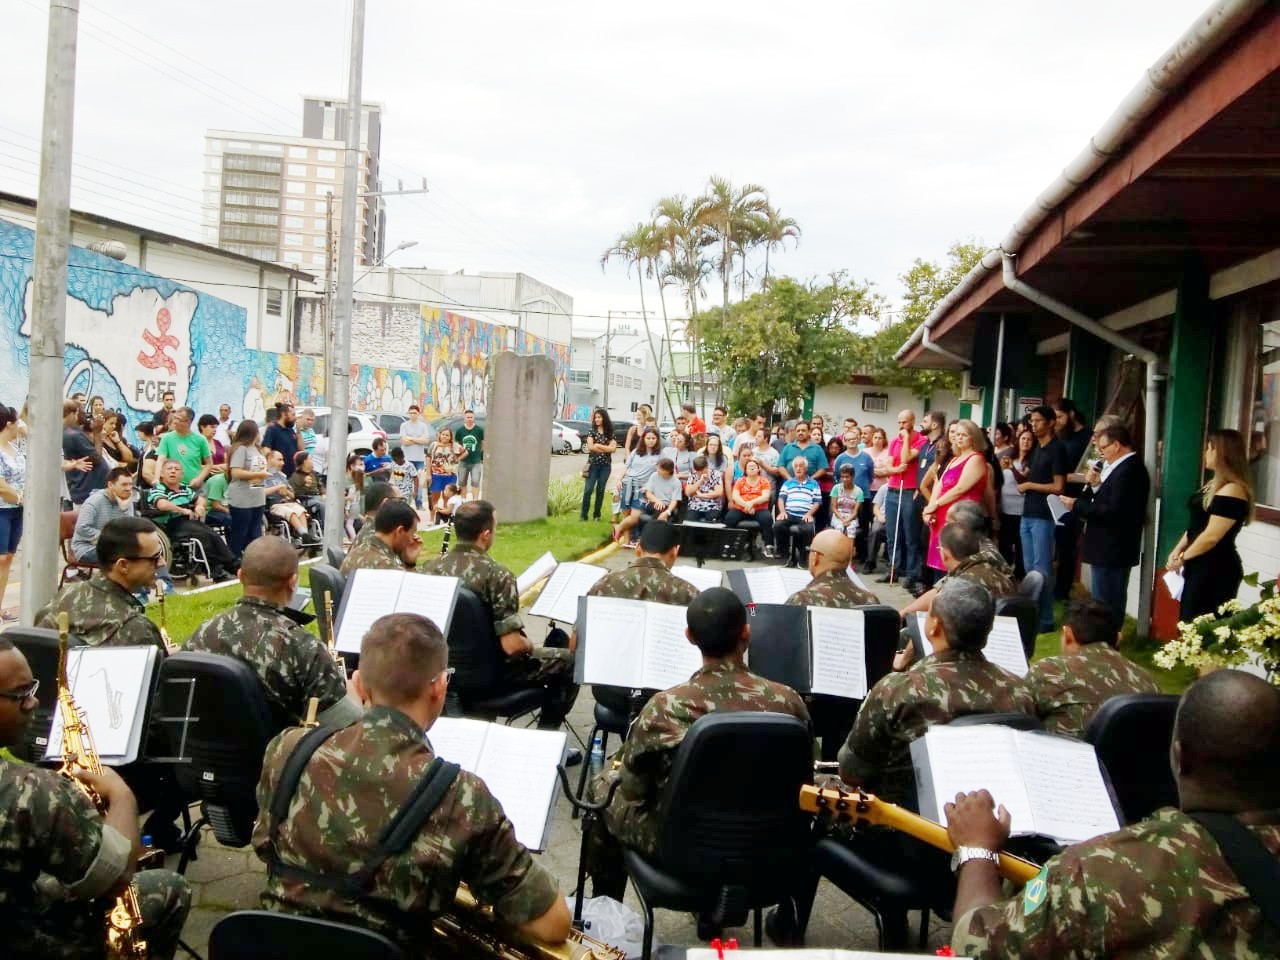 Banda do Exército executa músicas cerca por servidores, educandos e familiares